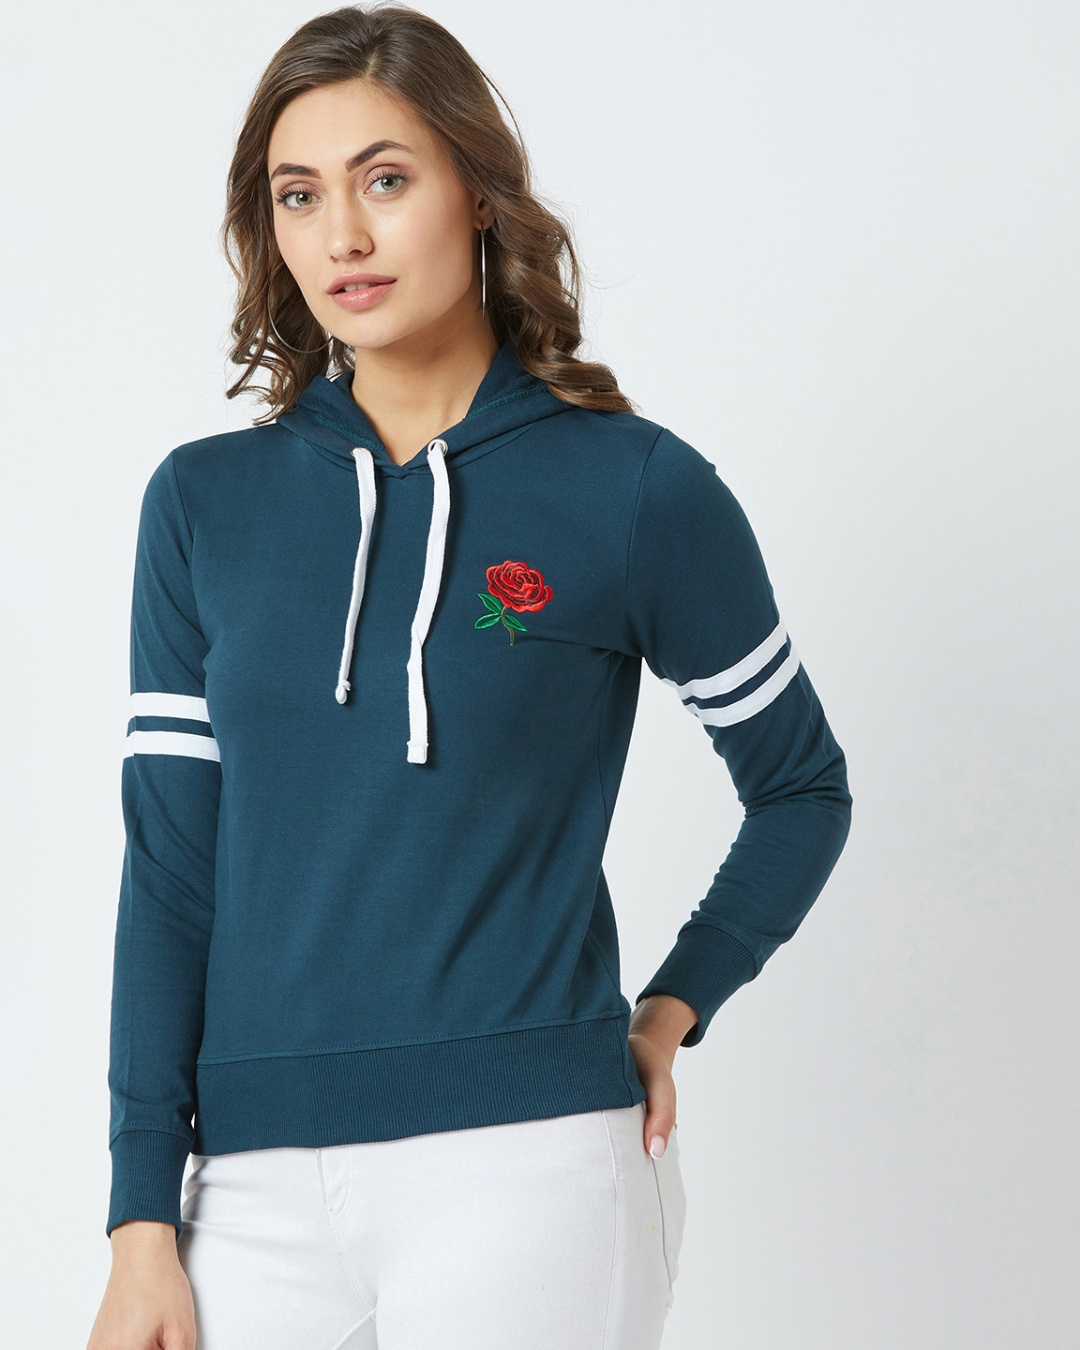 Shop Rose Embroidered Sweatshirt in Blue-Back